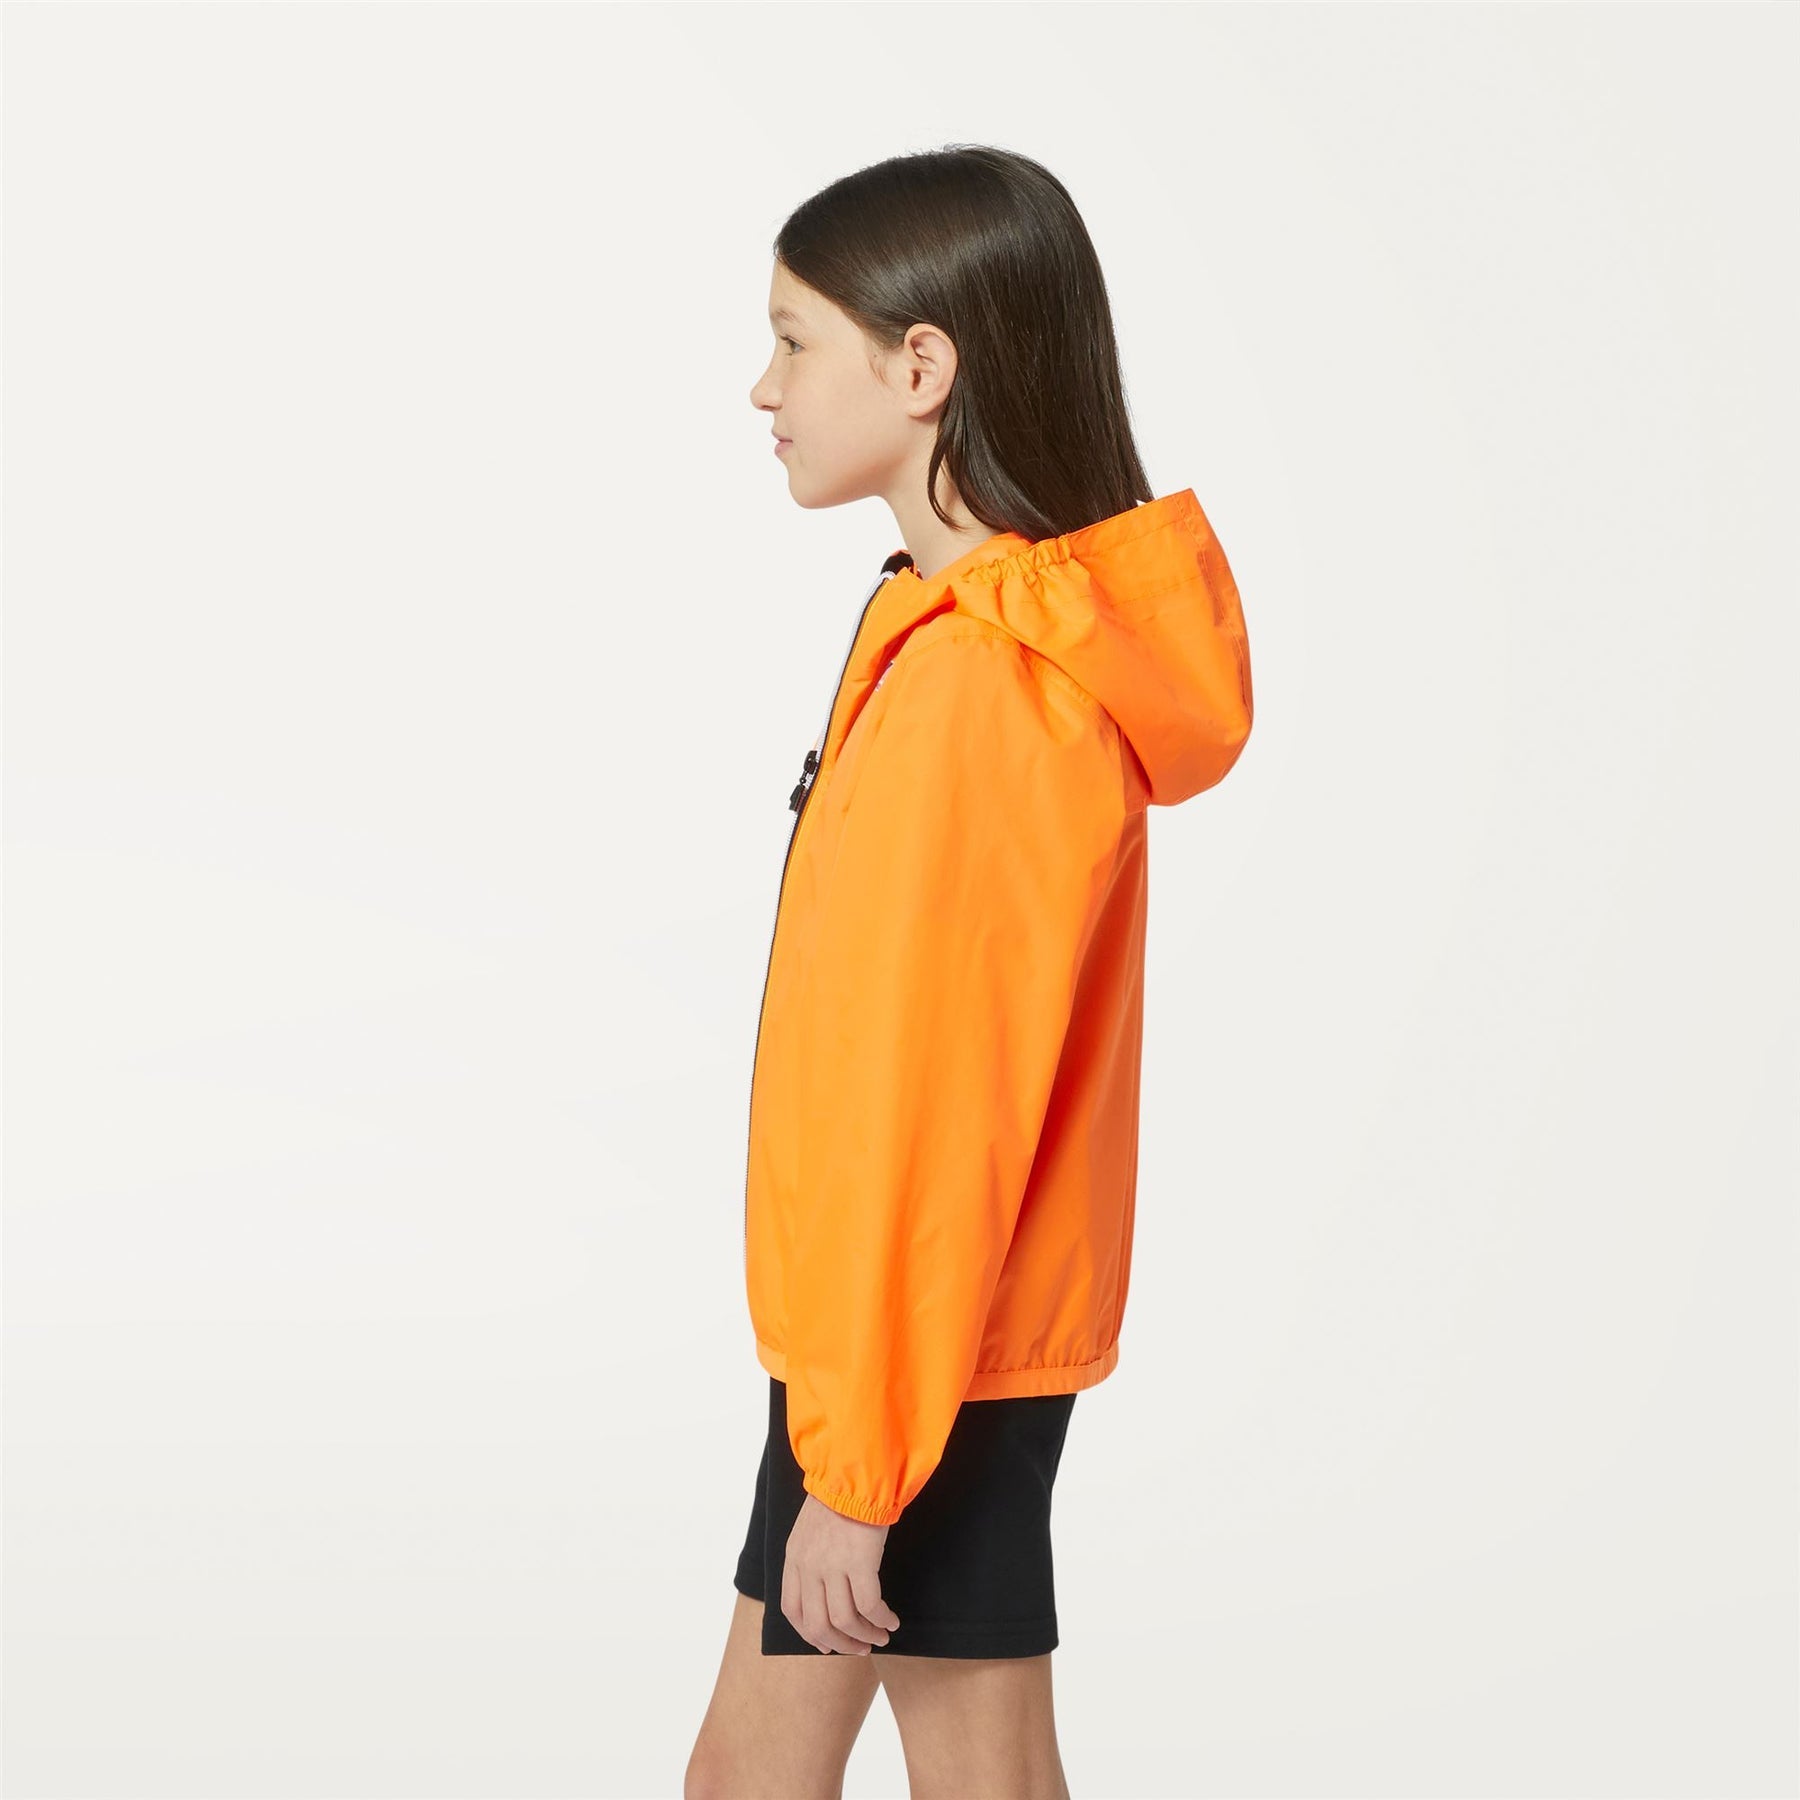 Claude - Kids Packable Full Zip Waterproof Rain Jacket in Light Orange